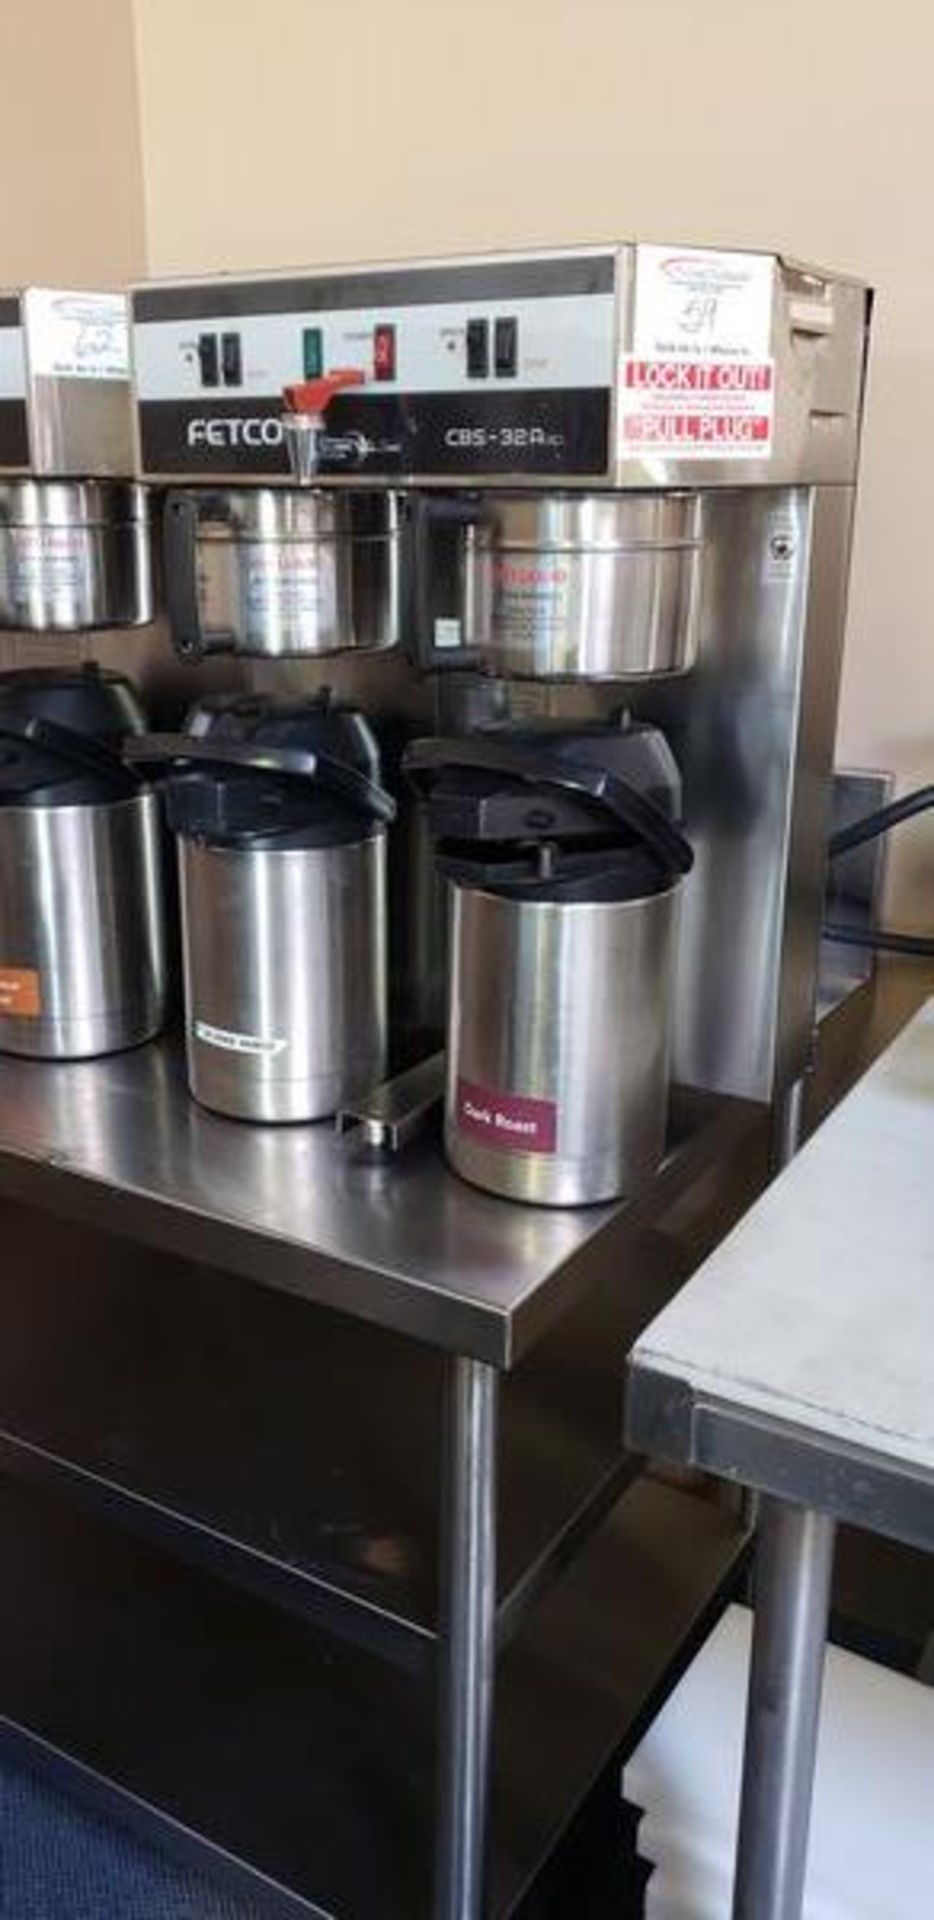 Fetco CBS32A Coffee Brewing System